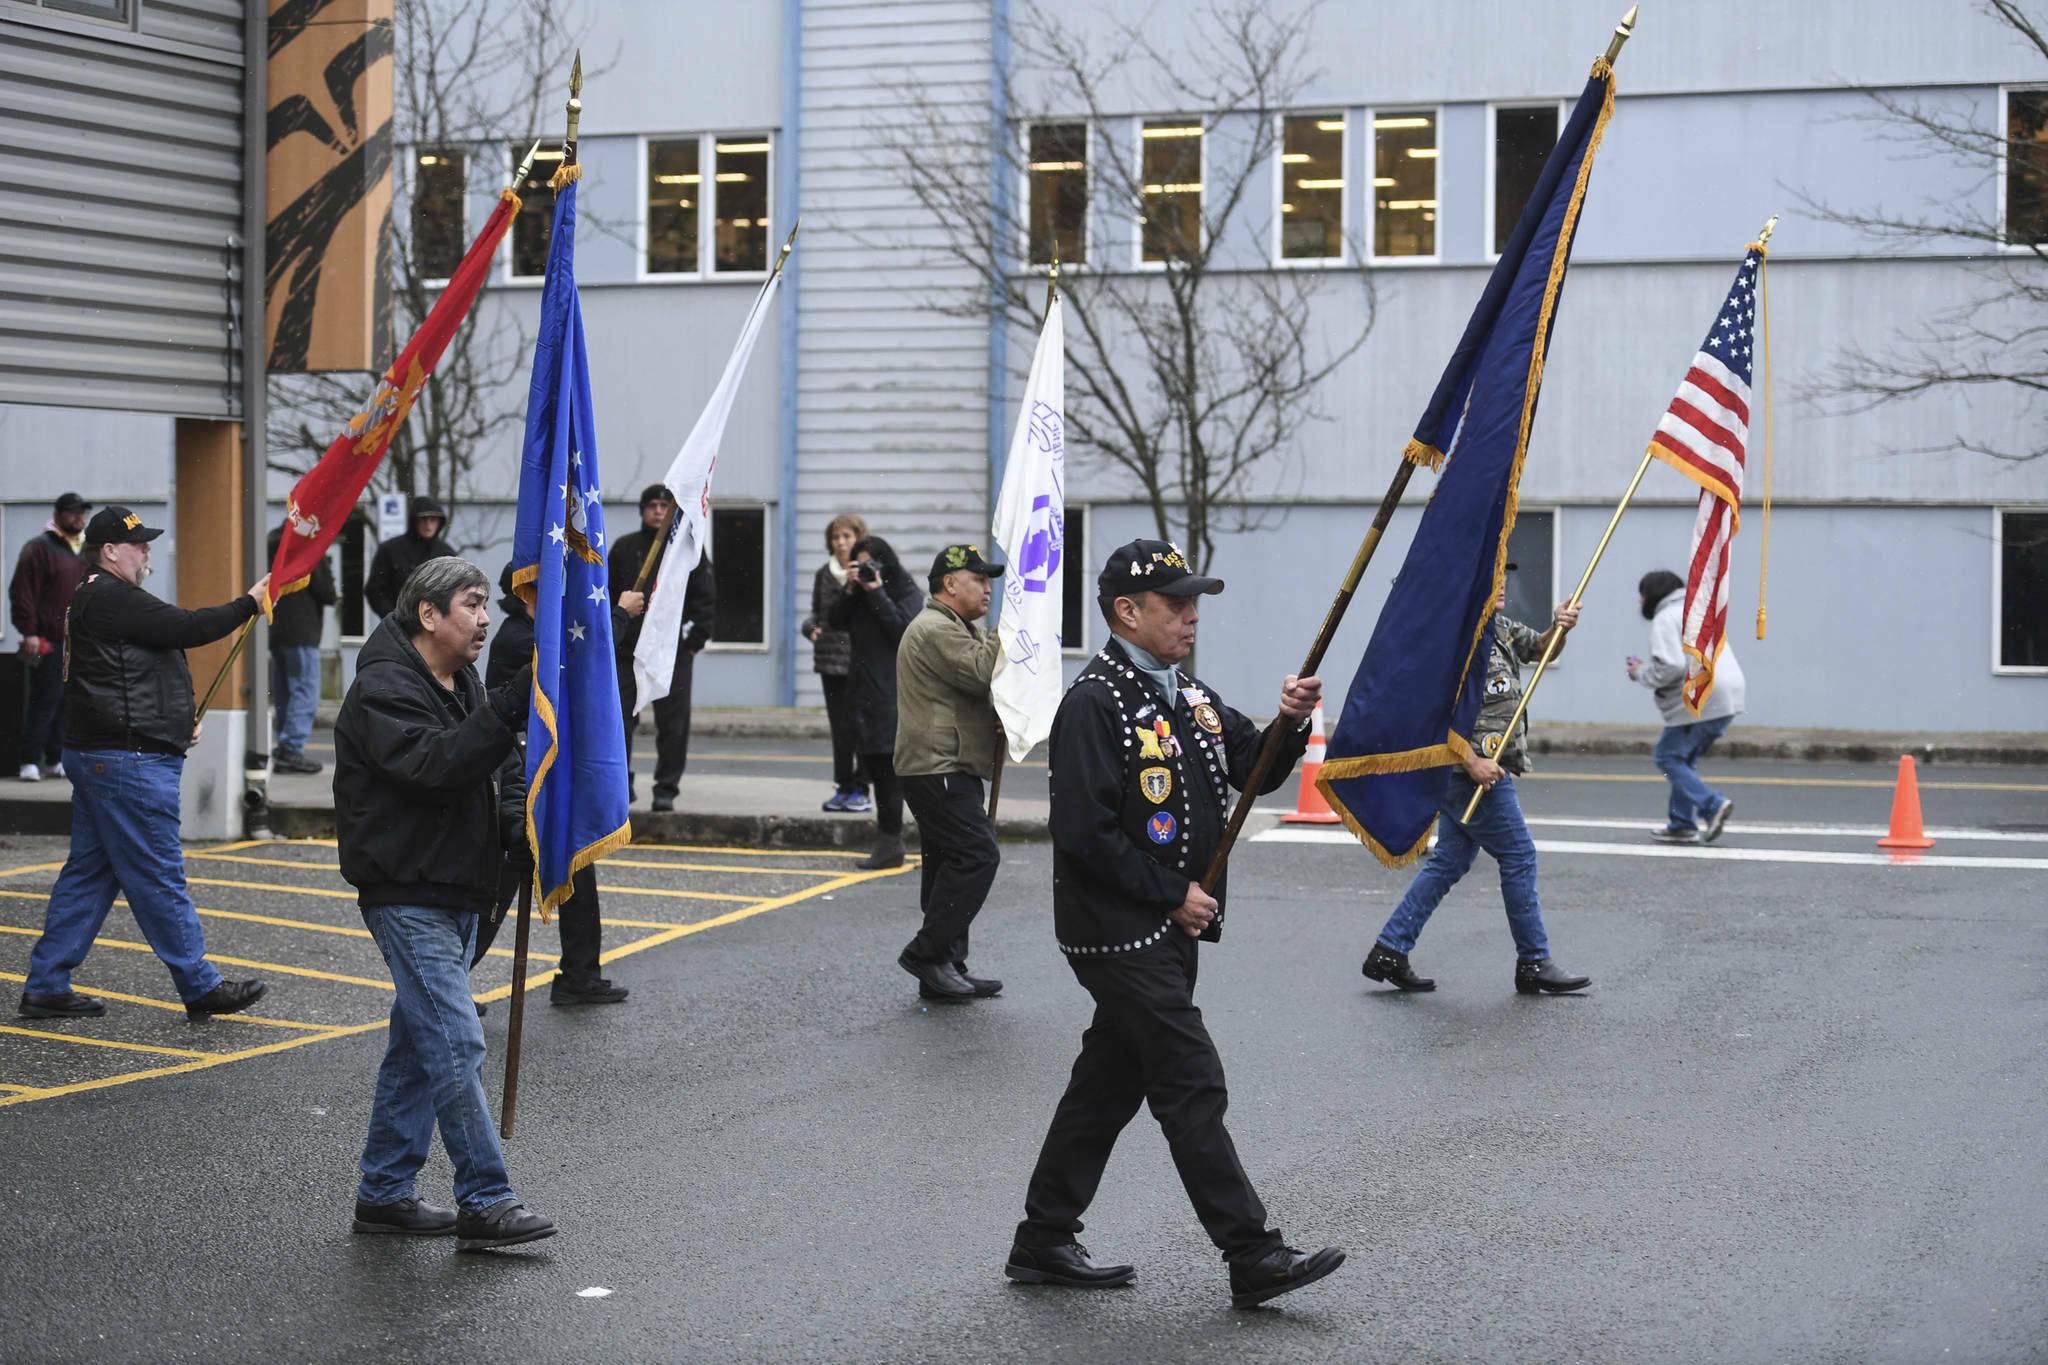 Southeast Alaska Native Veteran’s Color Guard presents the colors during the Veterans Day Ceremony at the SE Alaska Native Veterans Park on Monday, Nov. 11, 2019. (Michael Penn / Juneau Empire file photo)